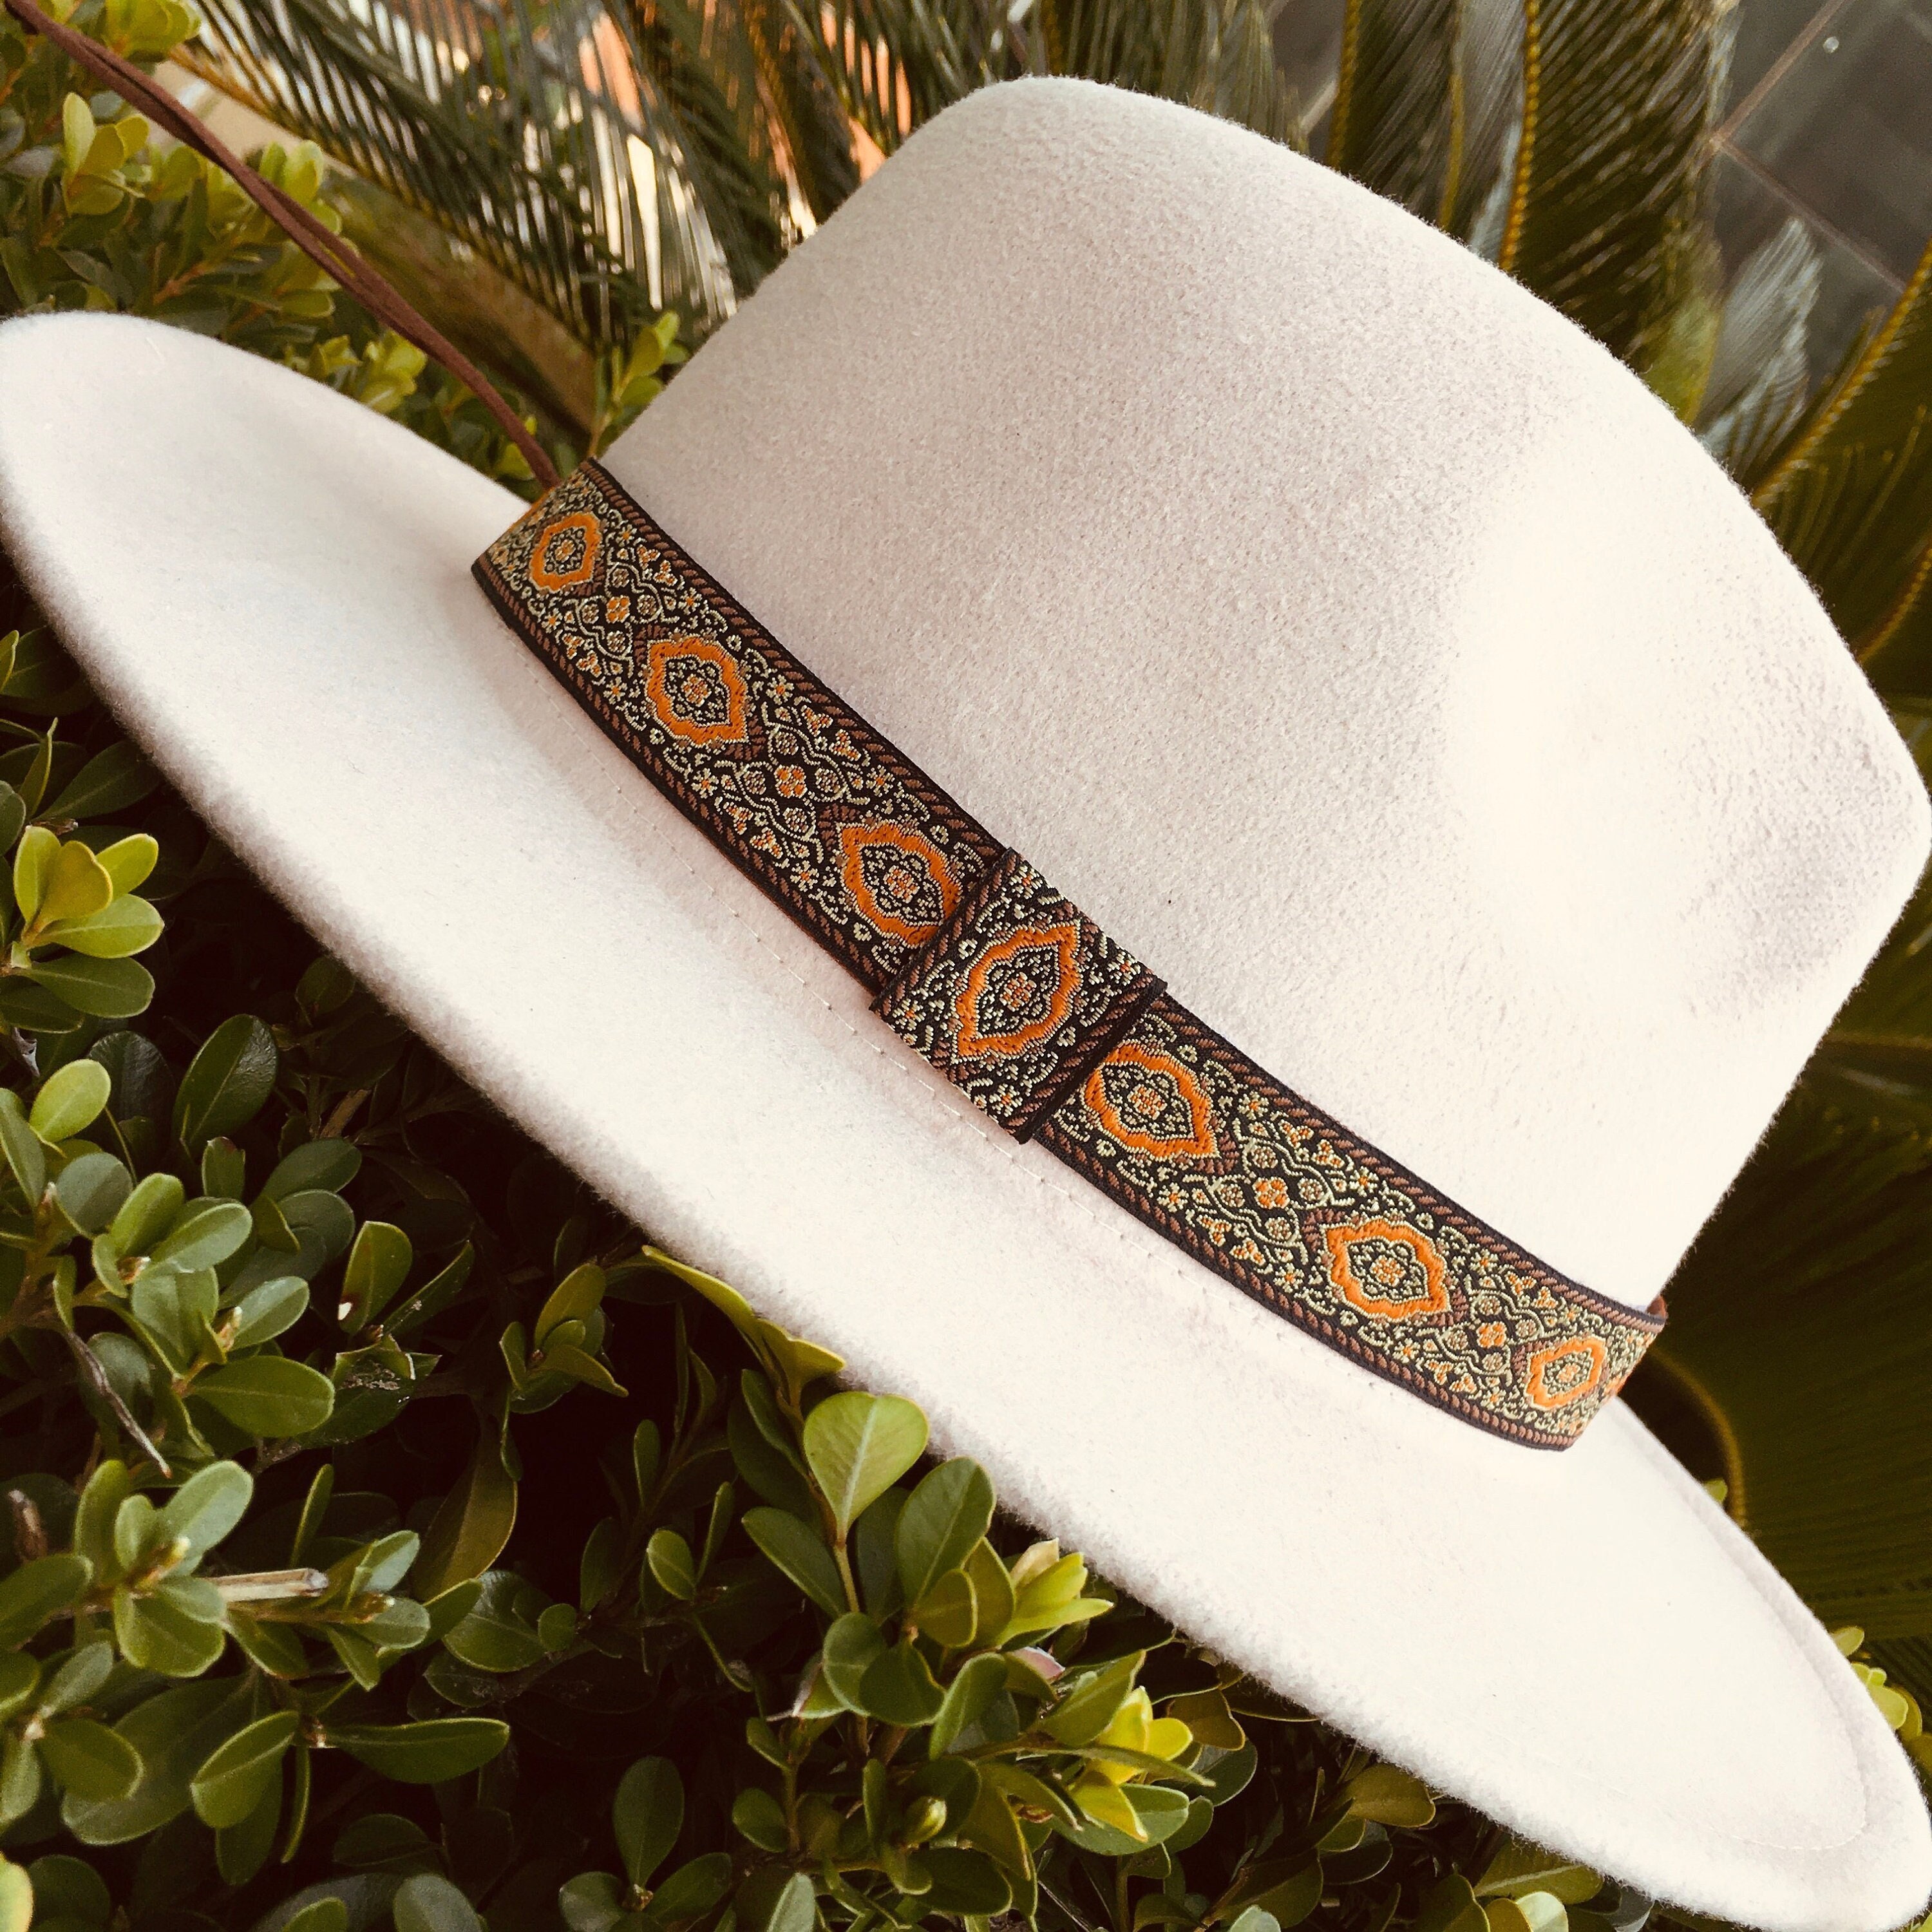 cowboy hat band